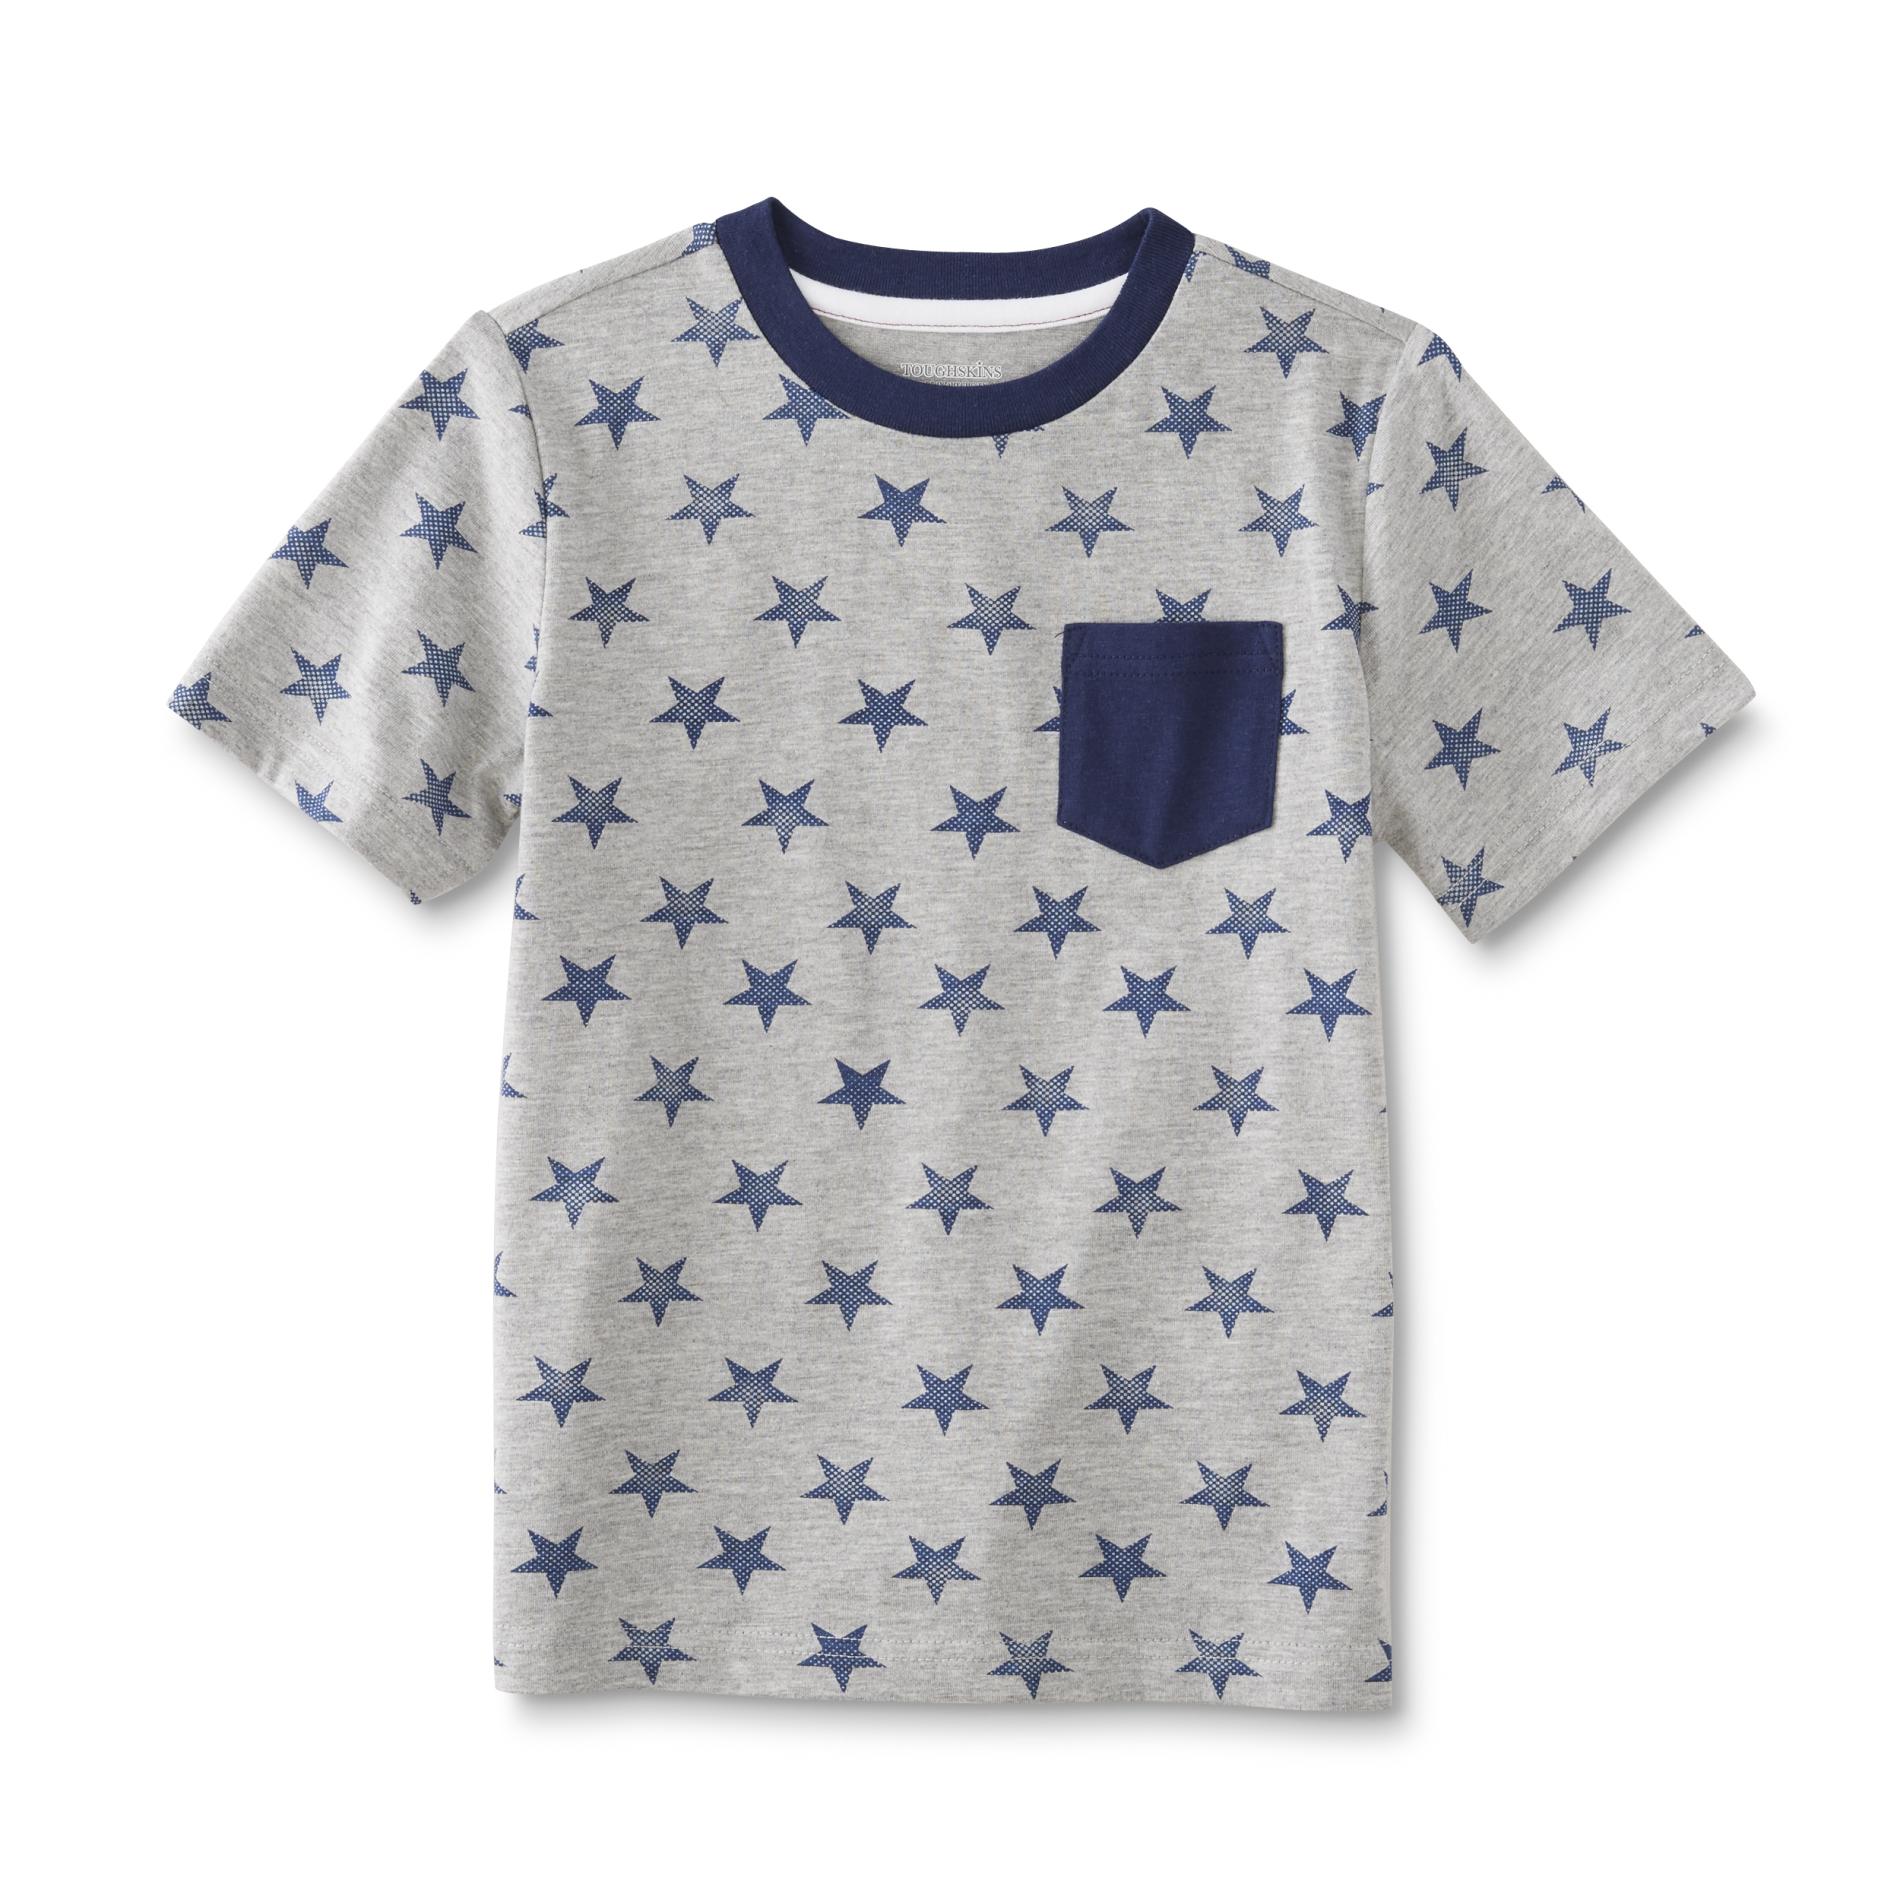 Toughskins Boys' Pocket T-Shirt - Stars